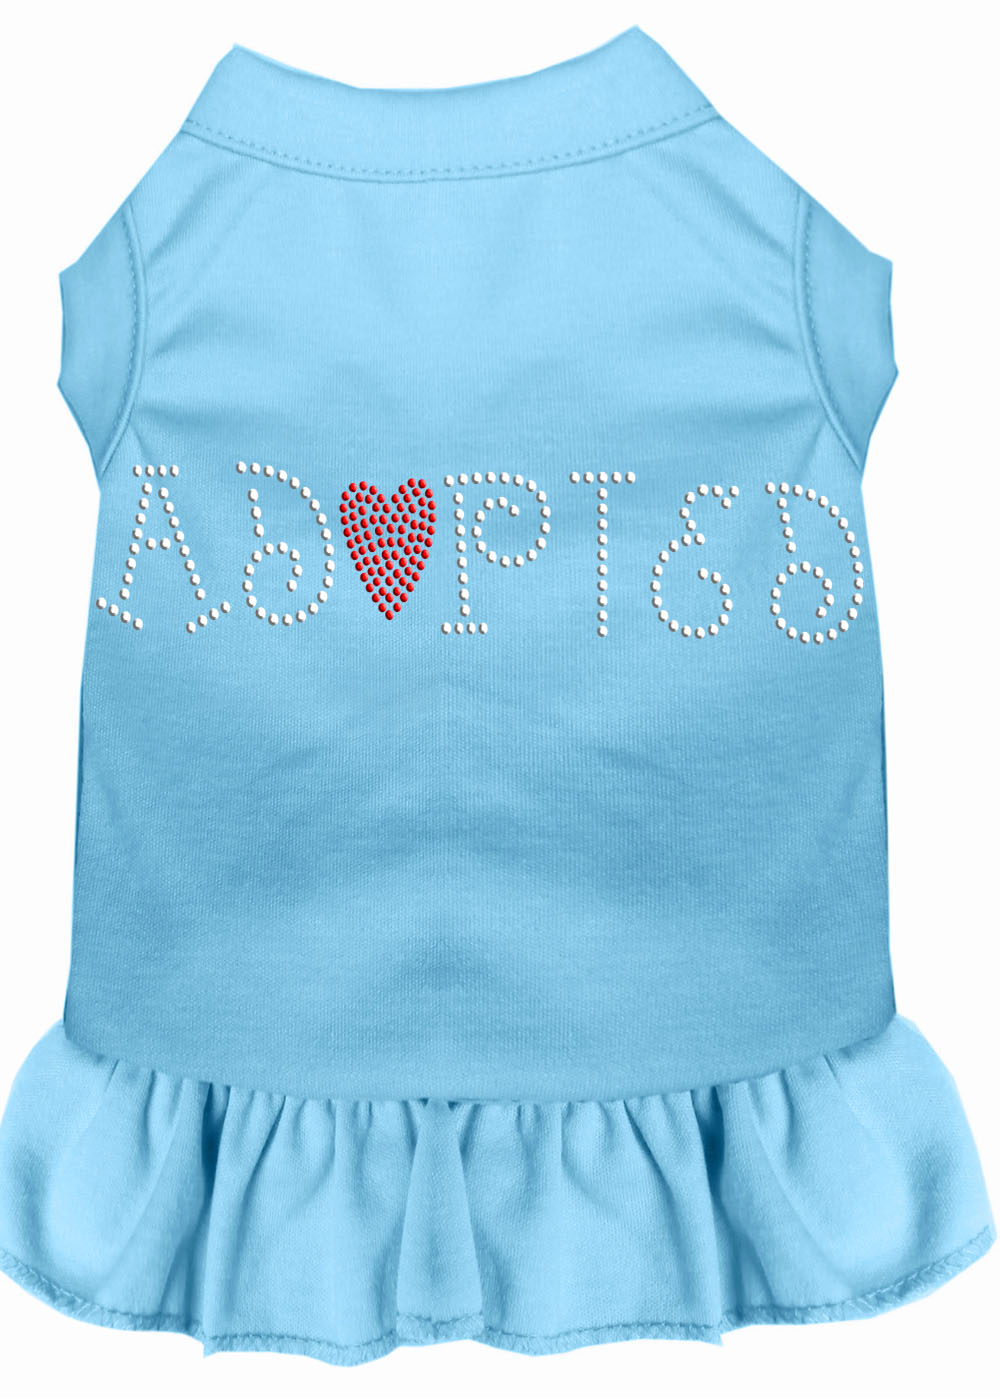 Adopted Rhinestone Dress Baby Blue XL